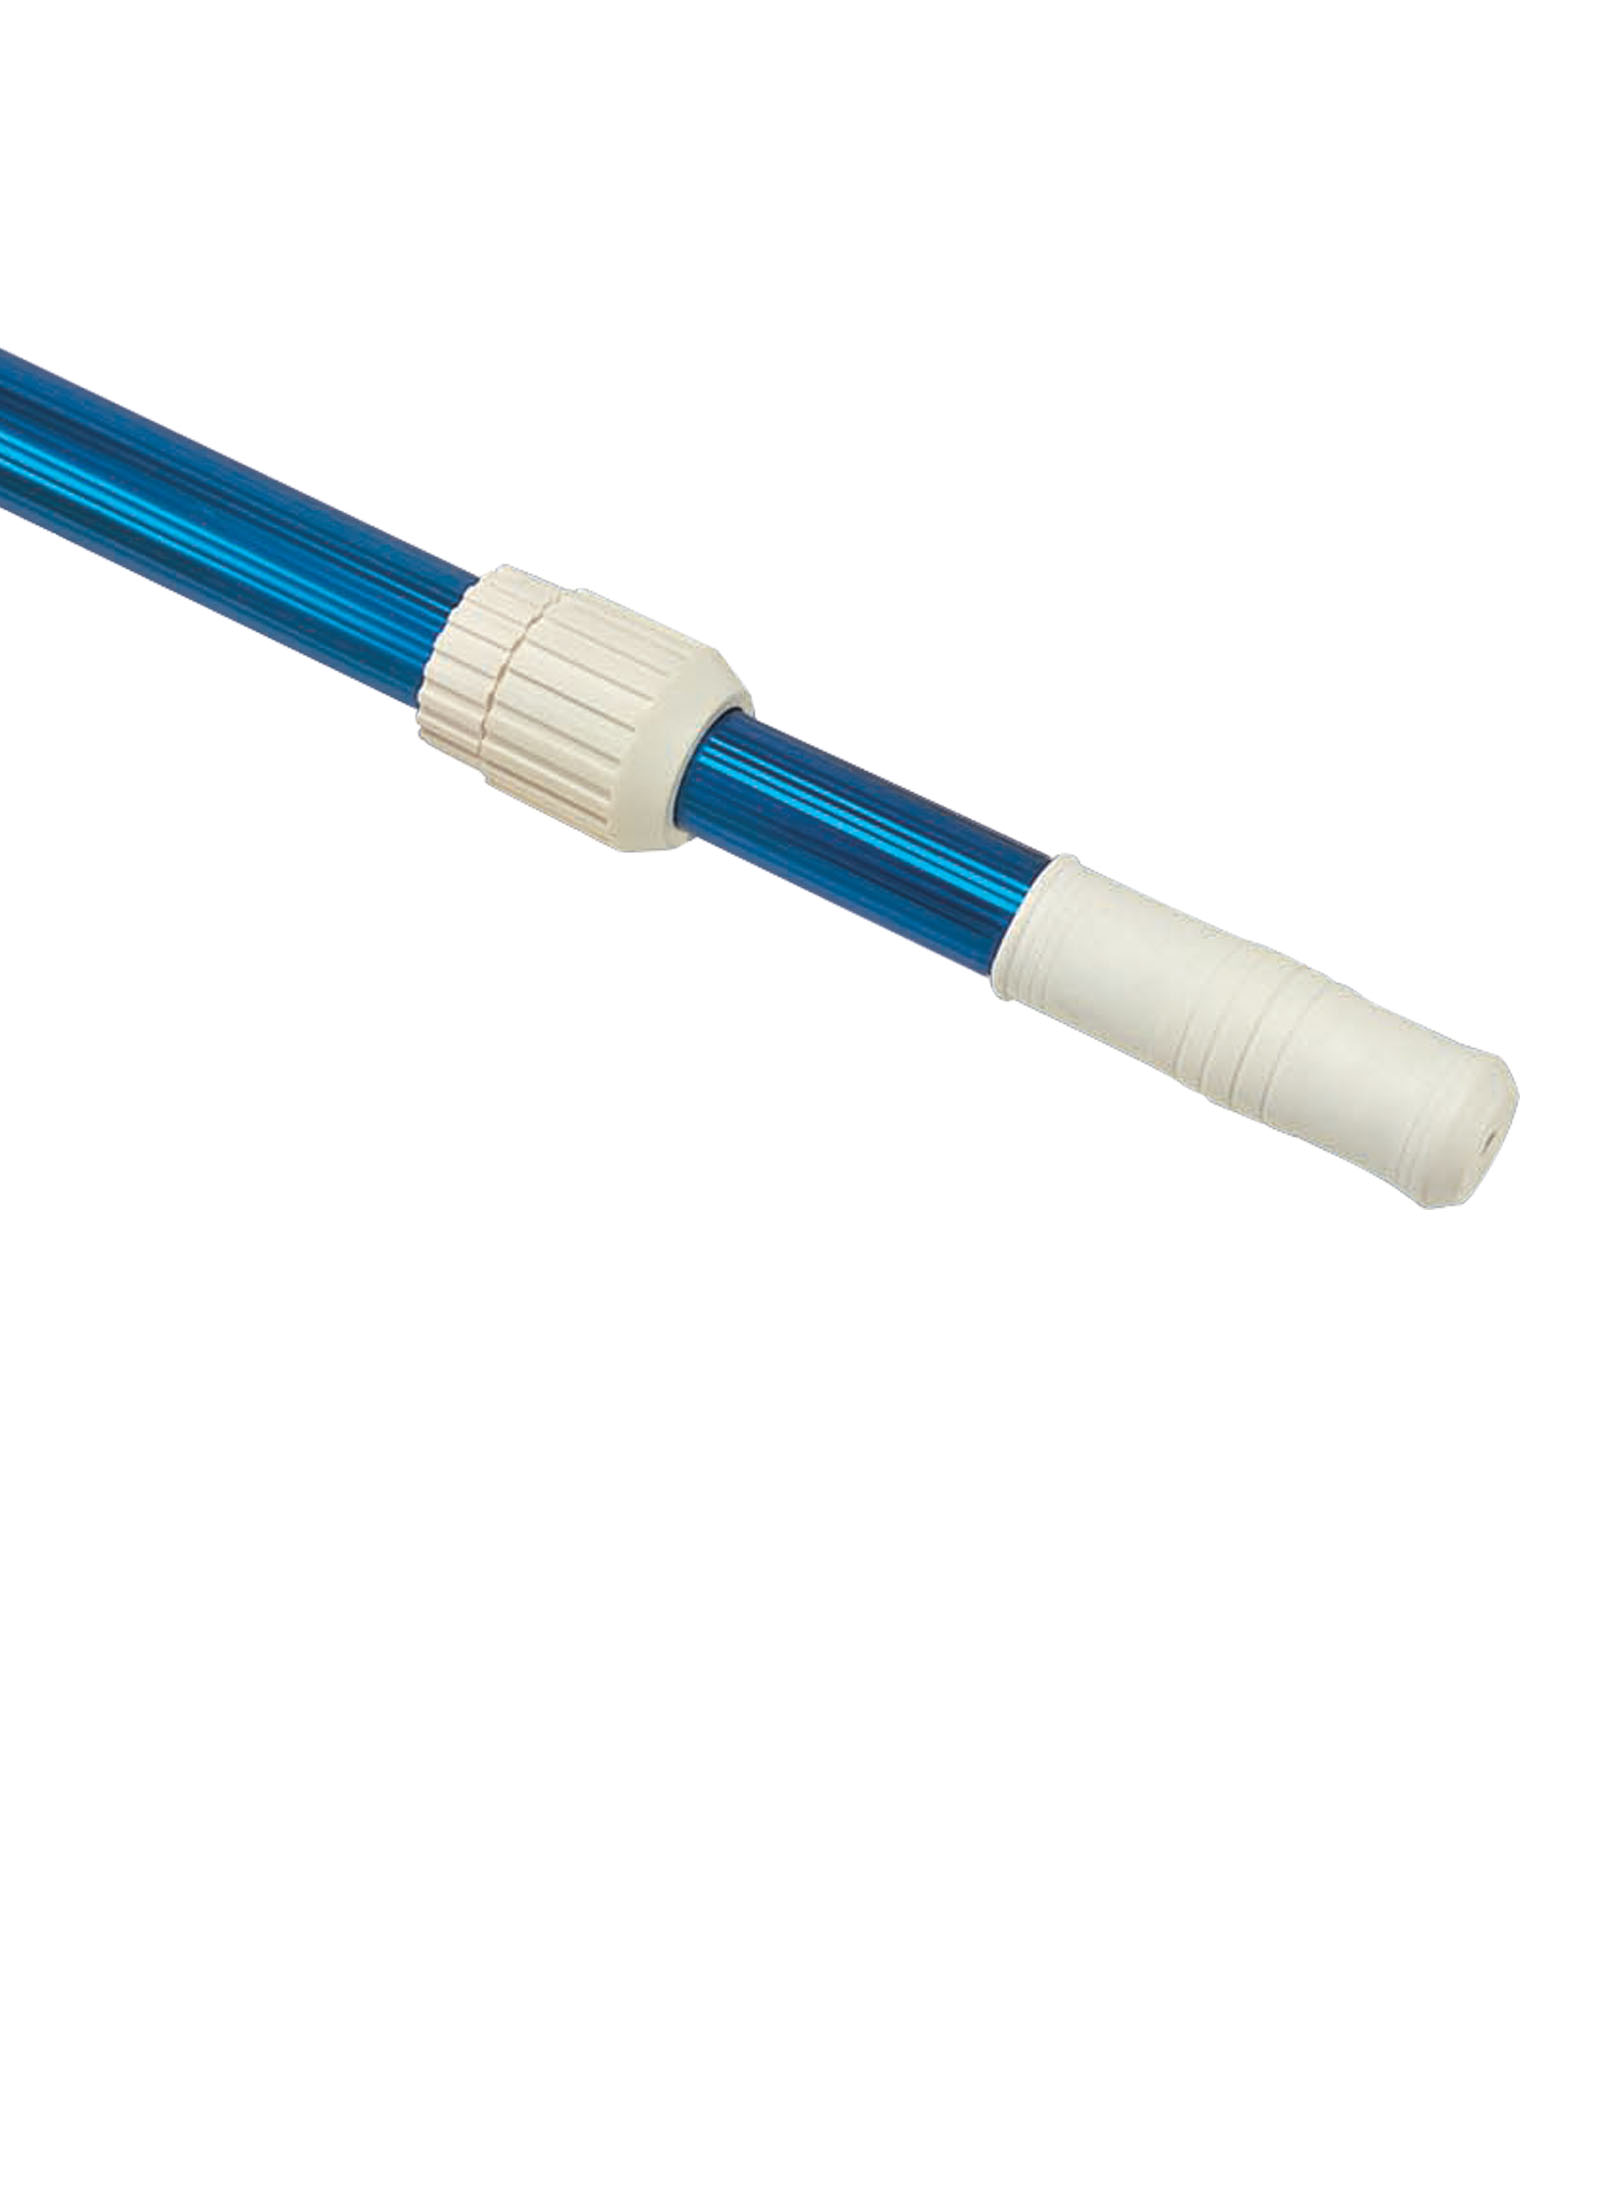 Vacuum Pole 6-12 Ft- Blue Ribbed 100010EE